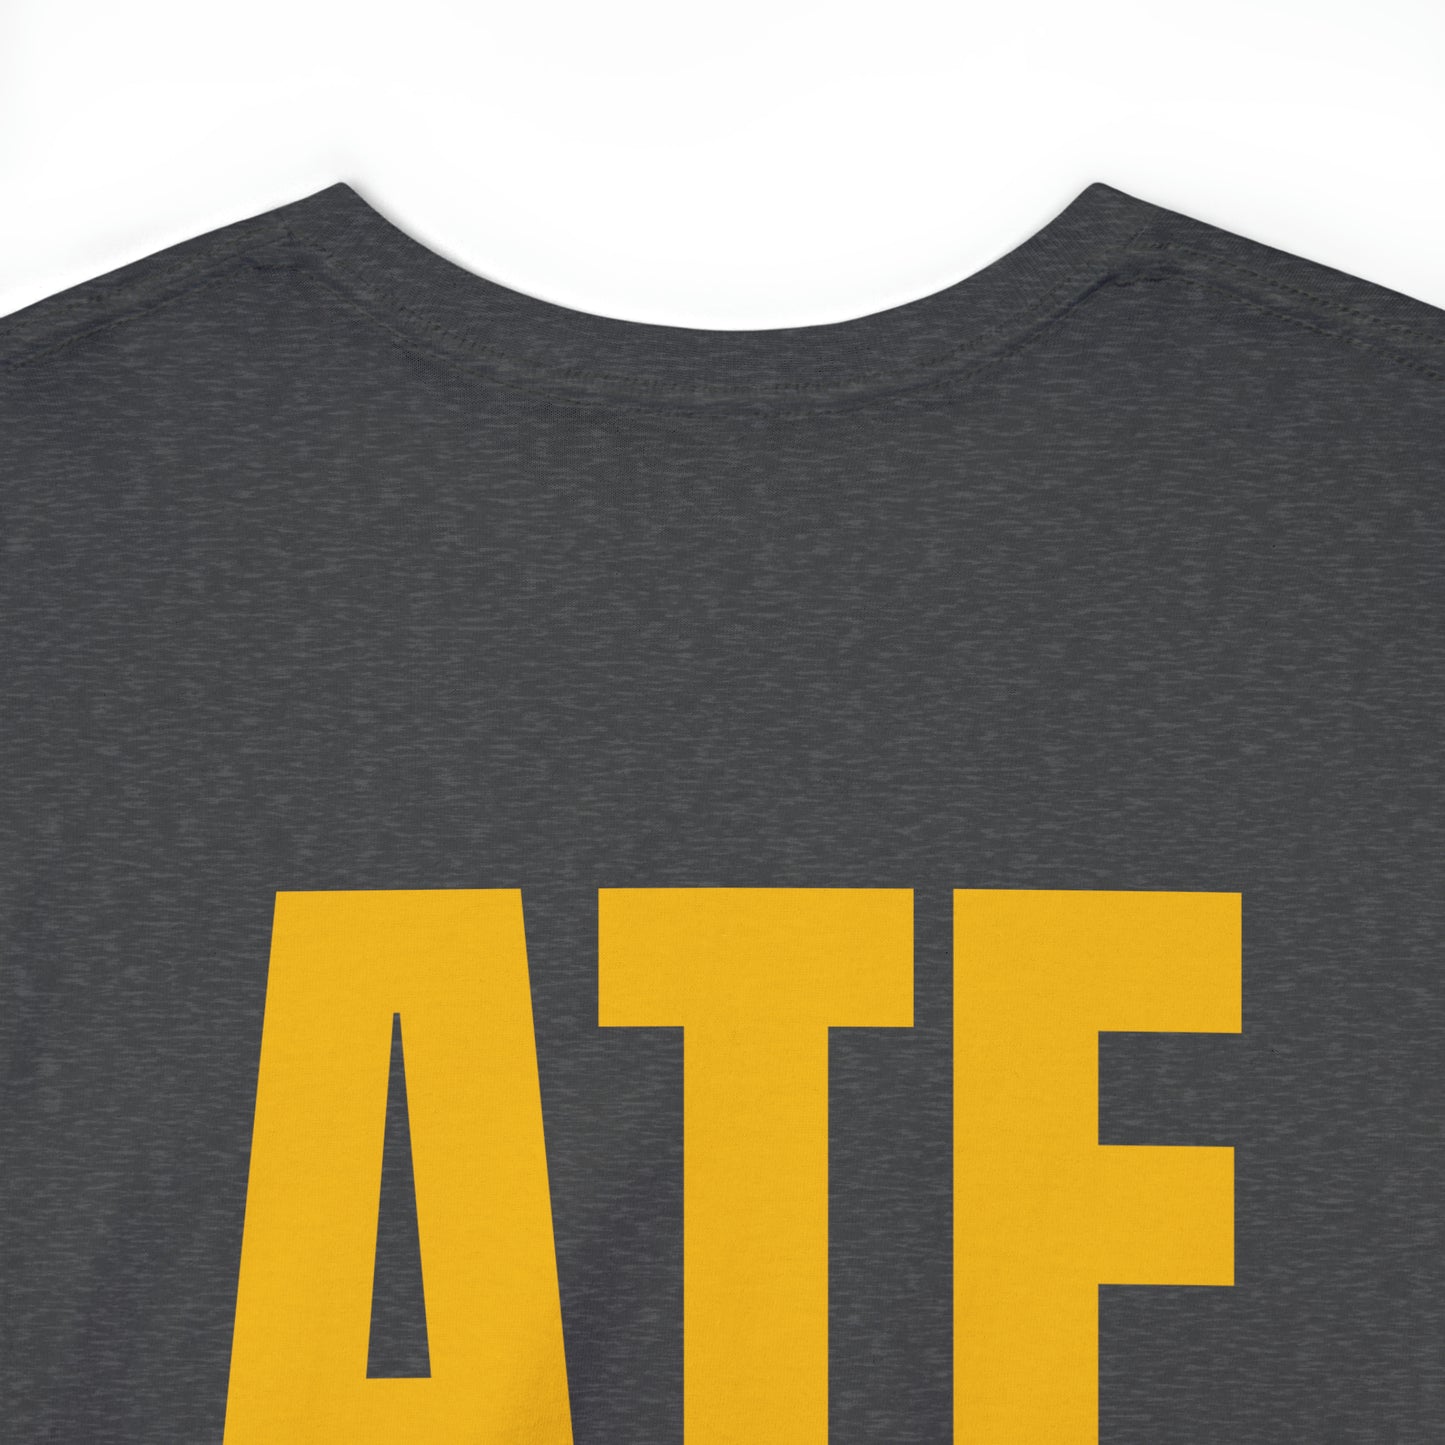 ATF is... Tee